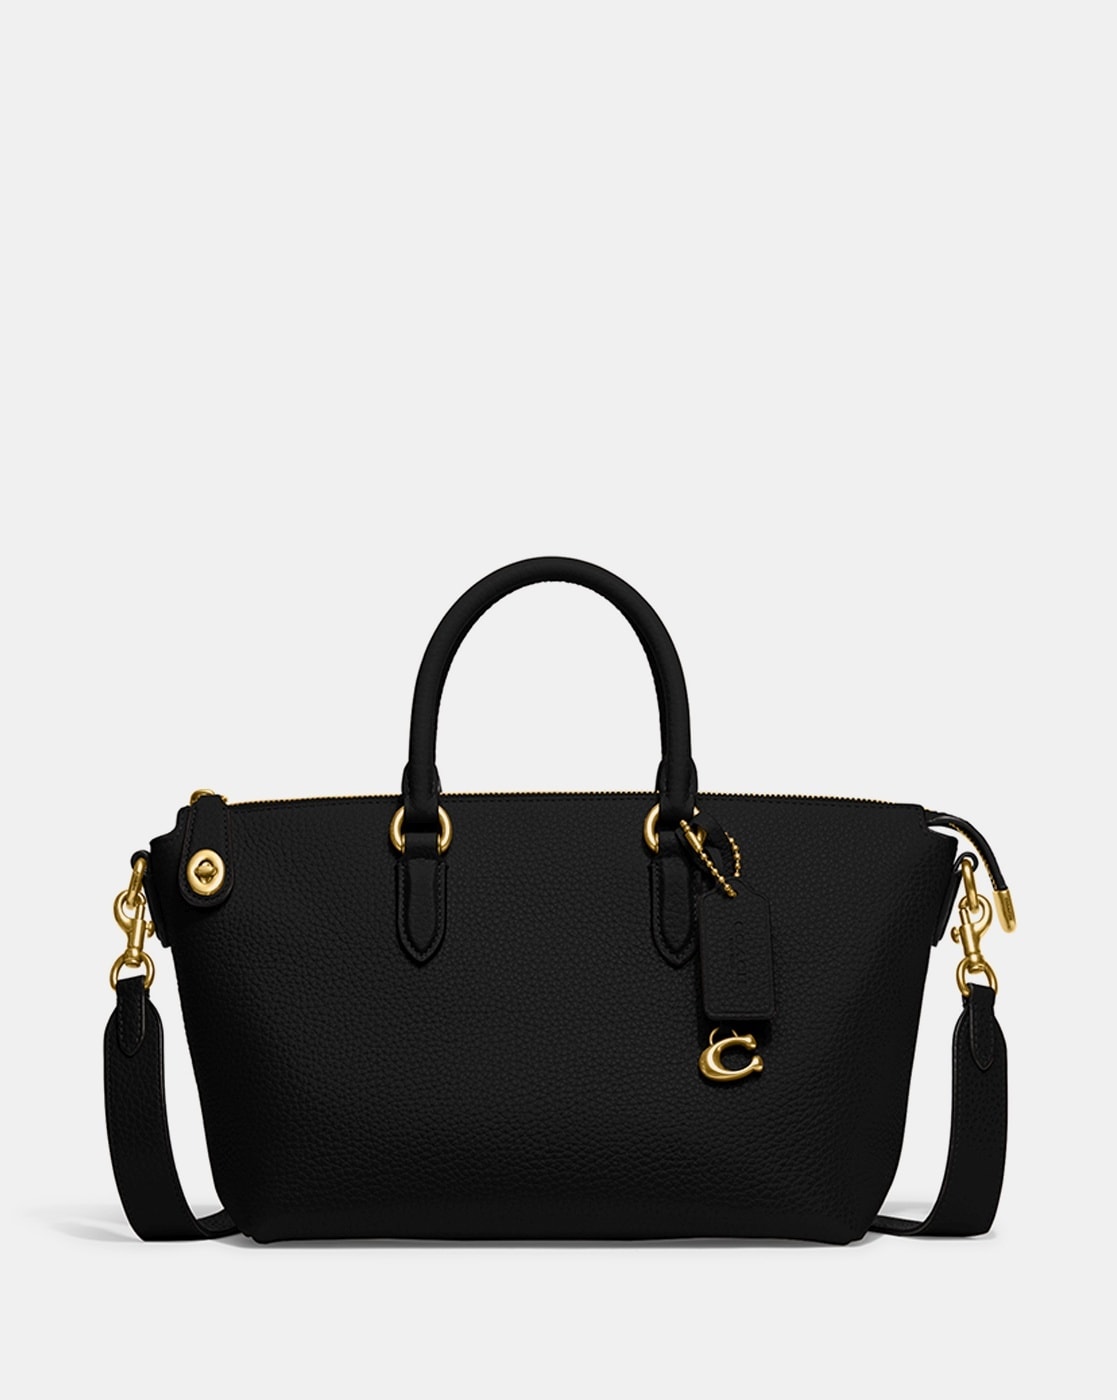 9'' Large Black Leather Side Bag Purse w/Organizer Front Pocket #P004K -  Jamin Leather®